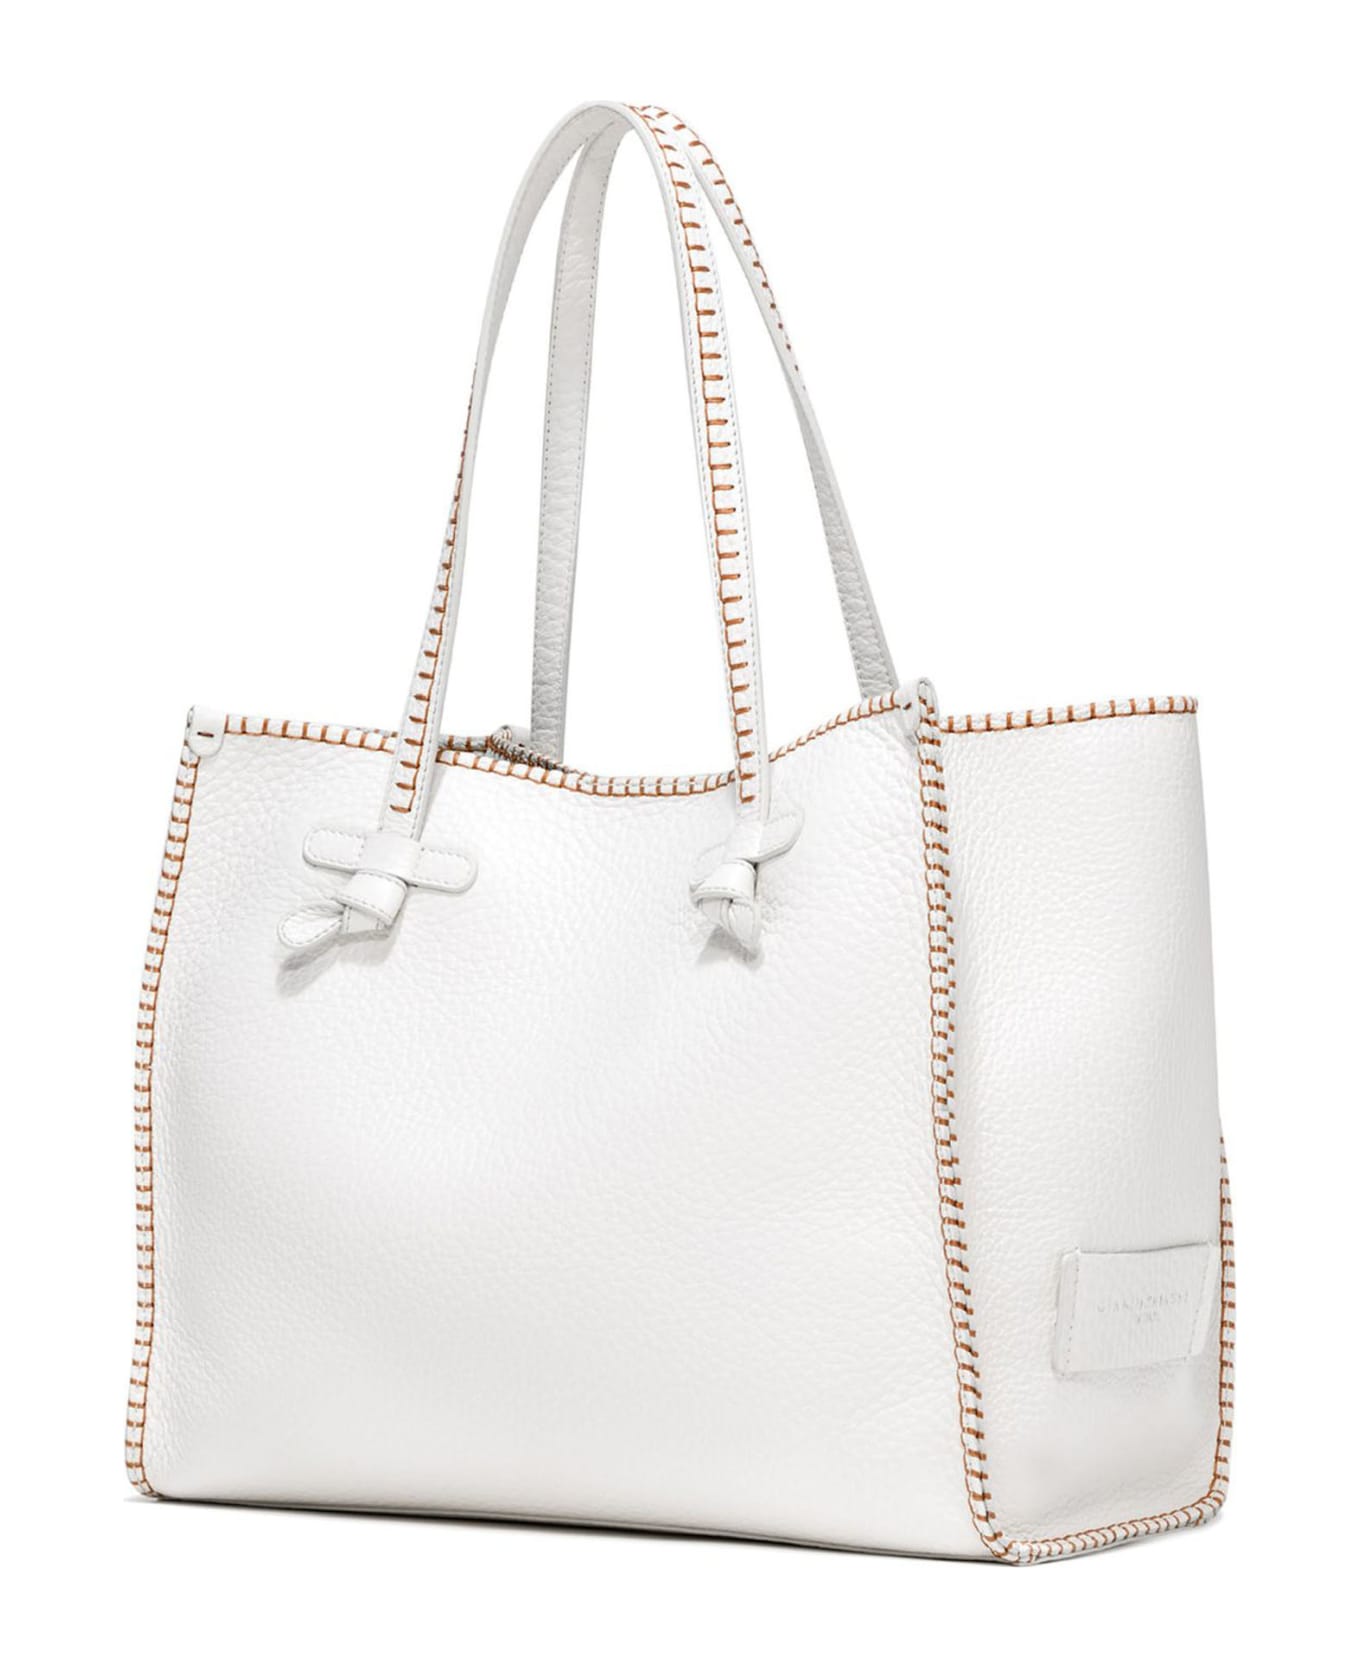 Gianni Chiarini White Soft Leather Shopping Bag - Bianco